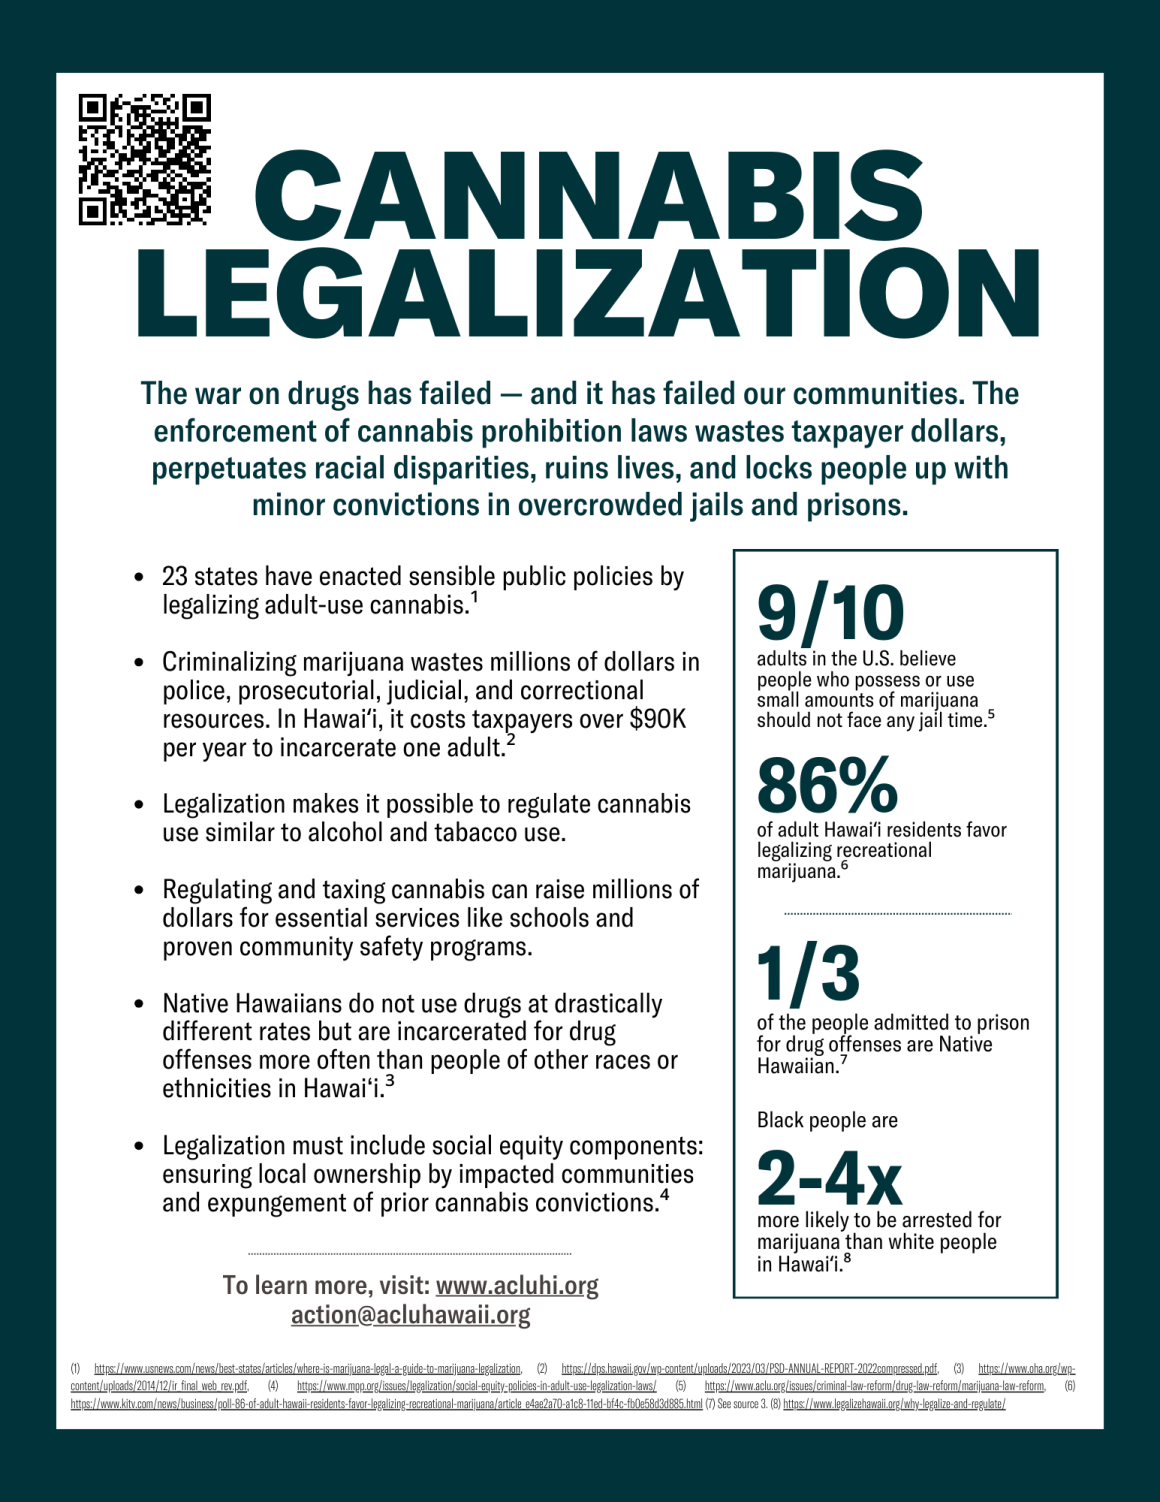 ACLU Hawaii cannabis legalization fact sheet.